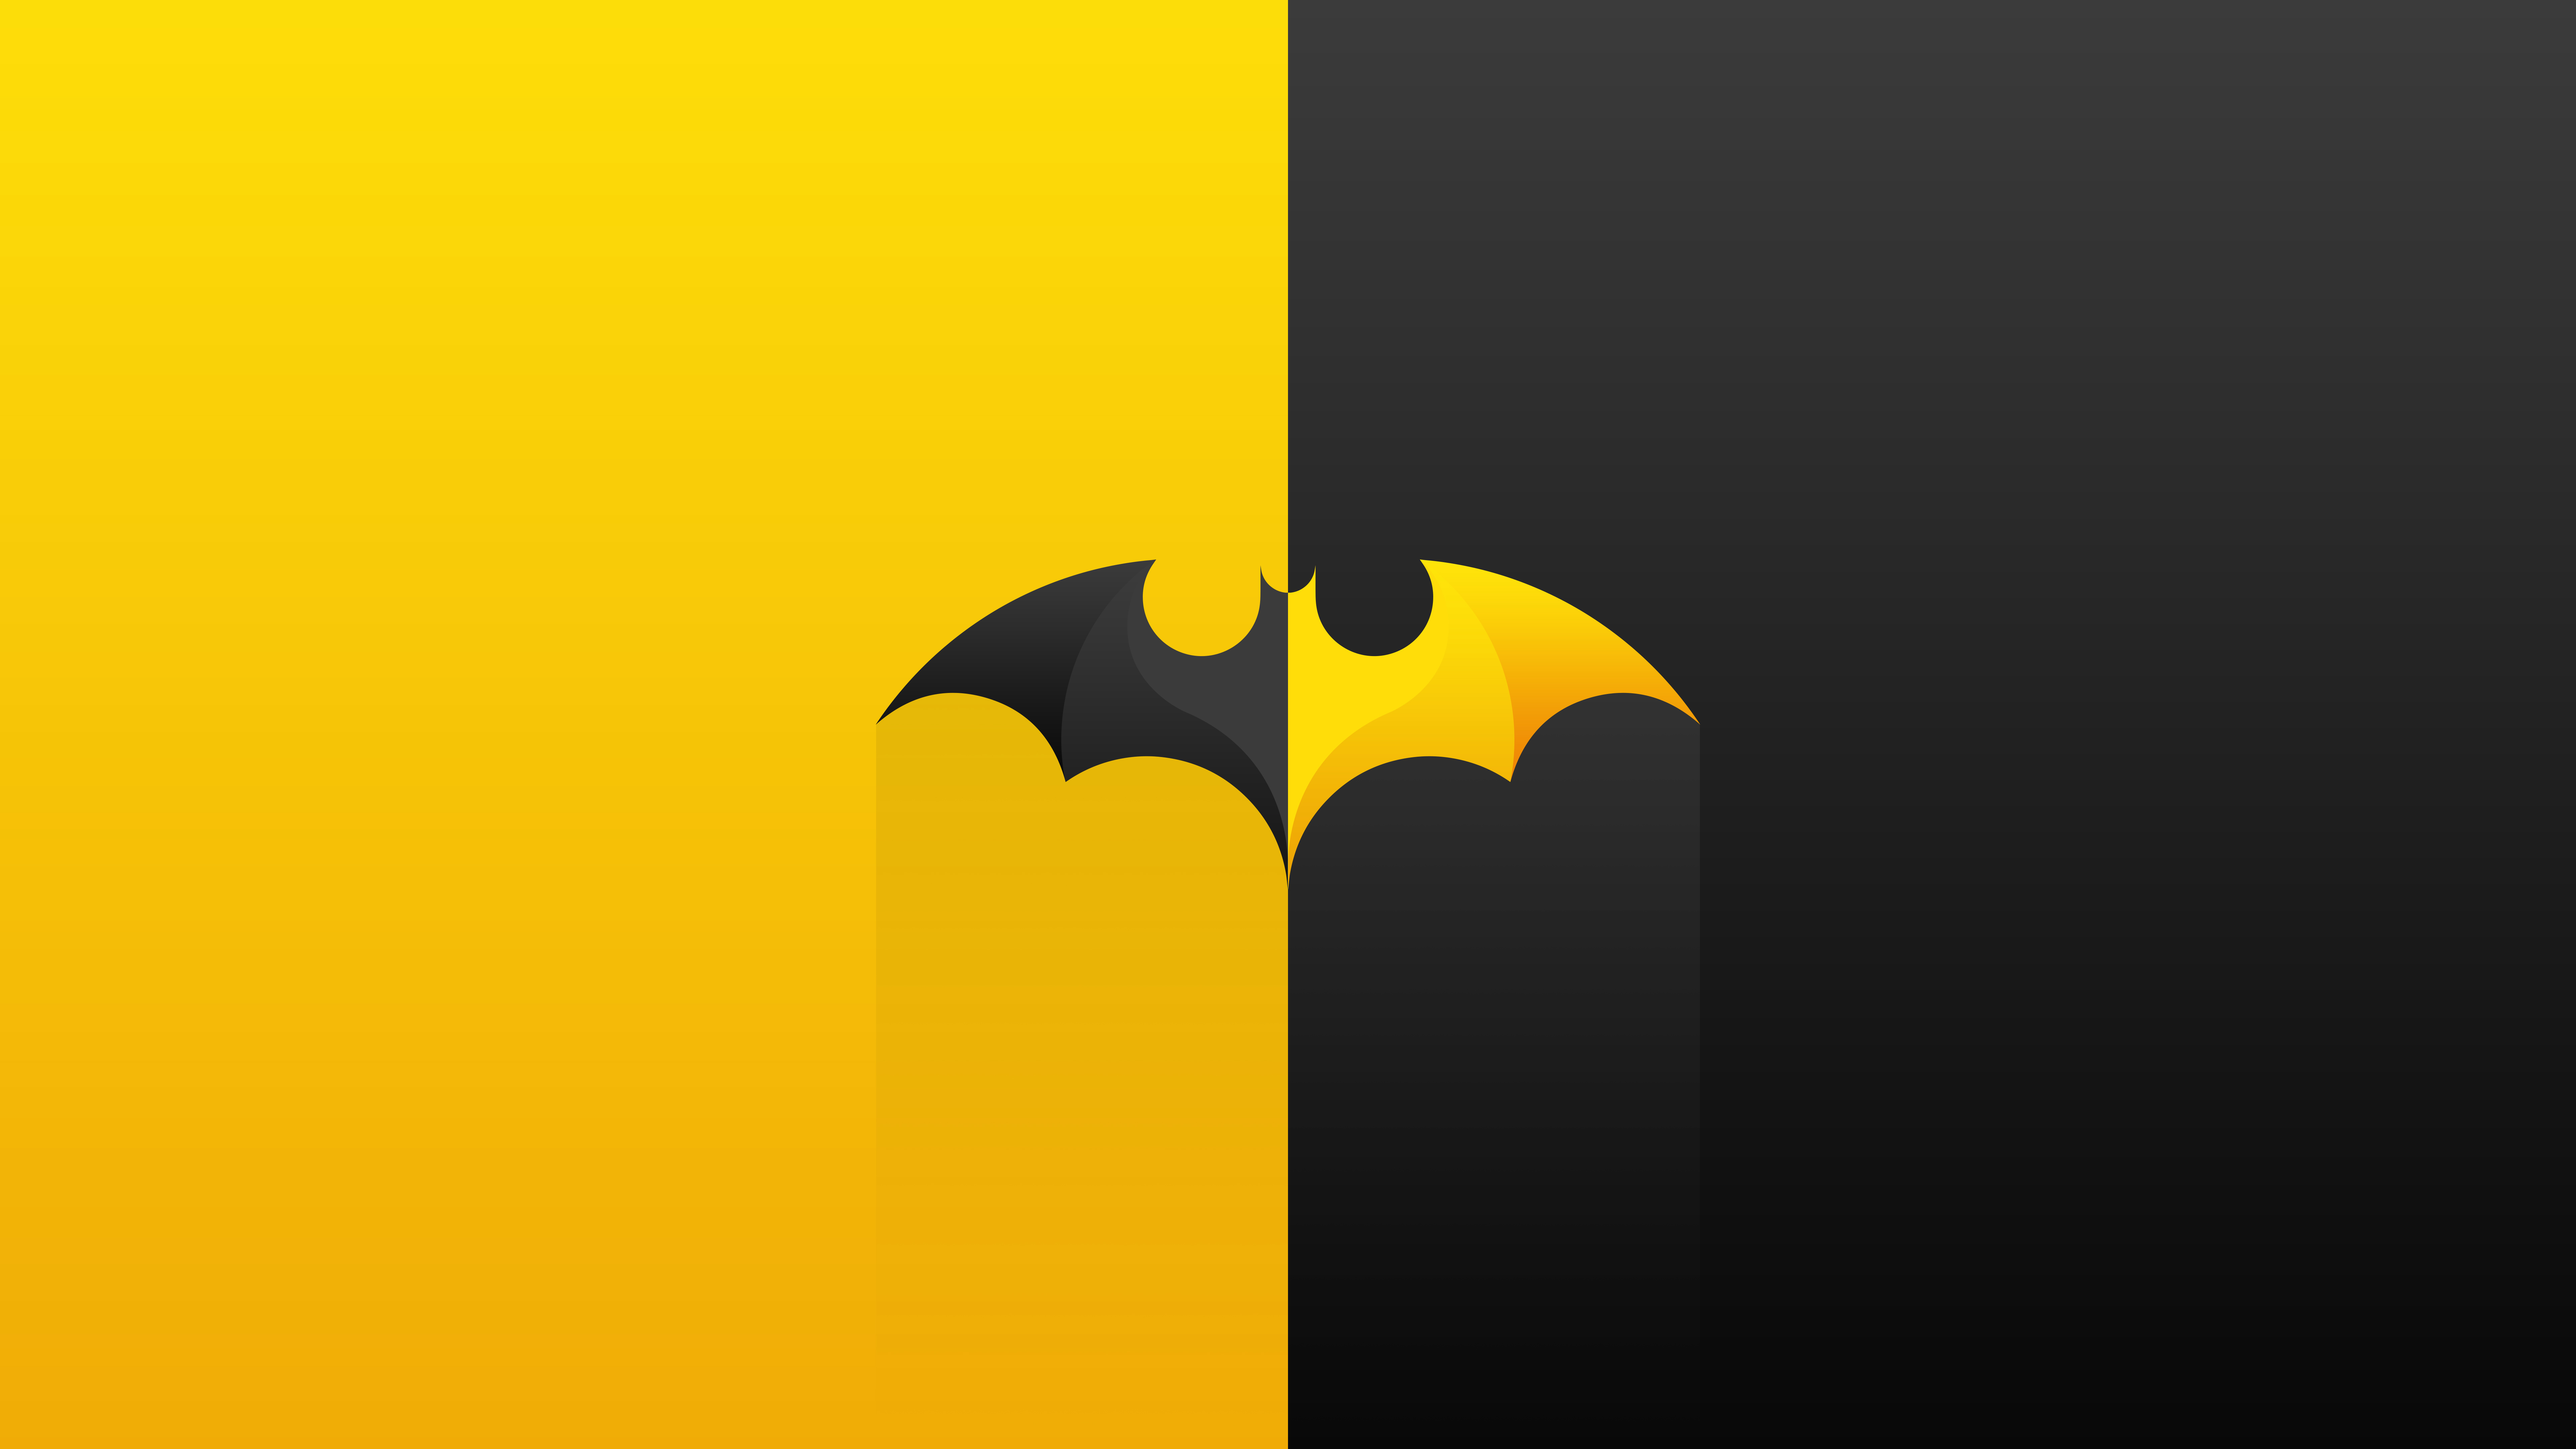 Free download Batman wallpaper wallpapers 4K Ultra HD Wallpapers download  now [600x380] for your Desktop, Mobile & Tablet | Explore 46+ 4K Batman  Wallpaper | Batman Wallpaper, Wallpaper Batman, Batman Wallpapers